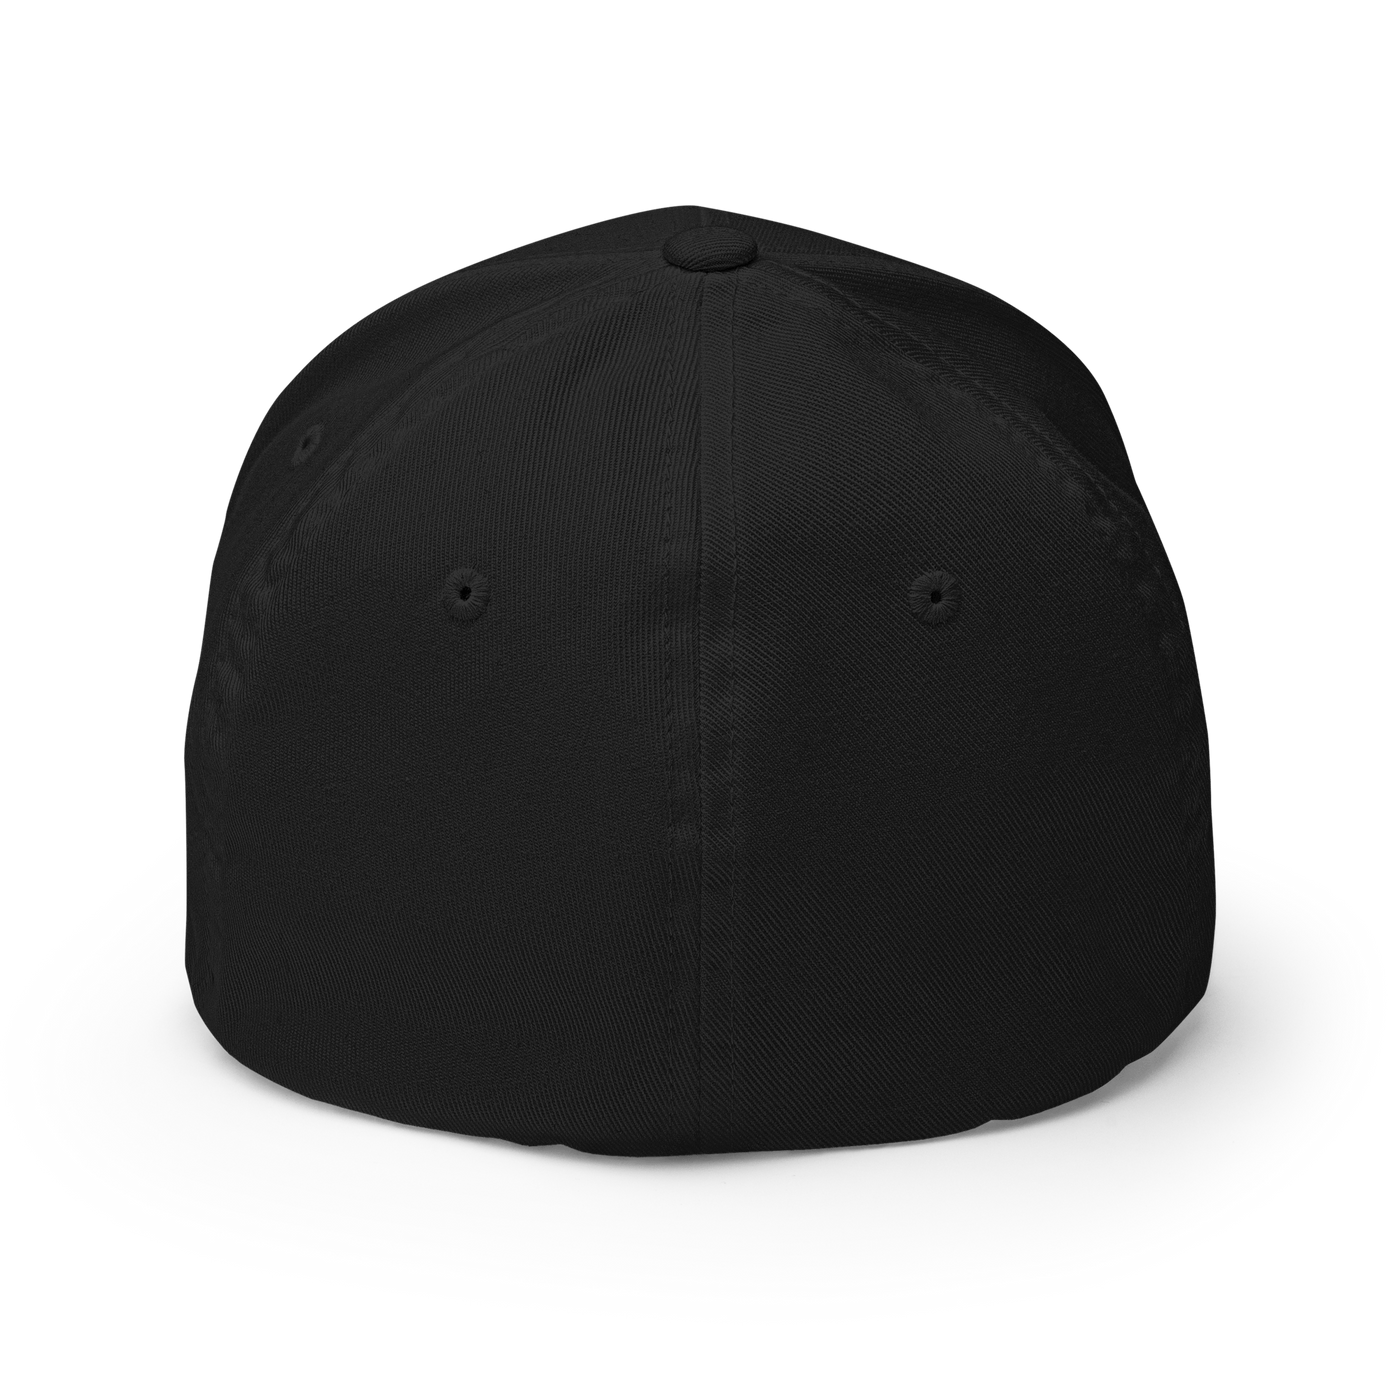 Call Me Flexfit Cap - Dark Navy - S/M - Just Another Cap Store